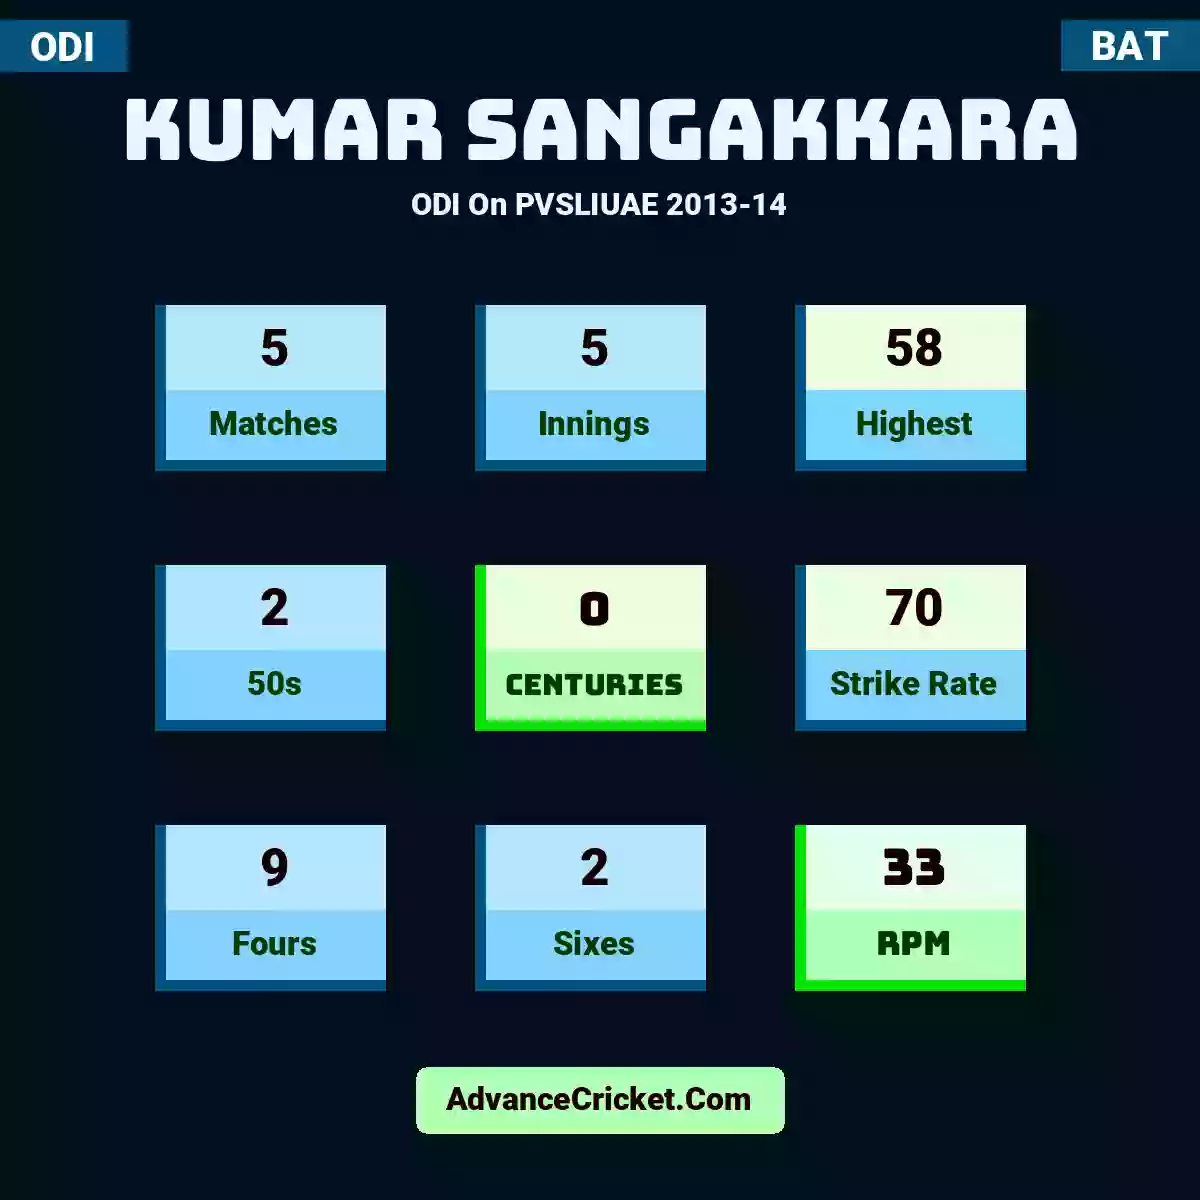 Kumar Sangakkara ODI  On PVSLIUAE 2013-14, Kumar Sangakkara played 5 matches, scored 58 runs as highest, 2 half-centuries, and 0 centuries, with a strike rate of 70. K.Sangakkara hit 9 fours and 2 sixes, with an RPM of 33.